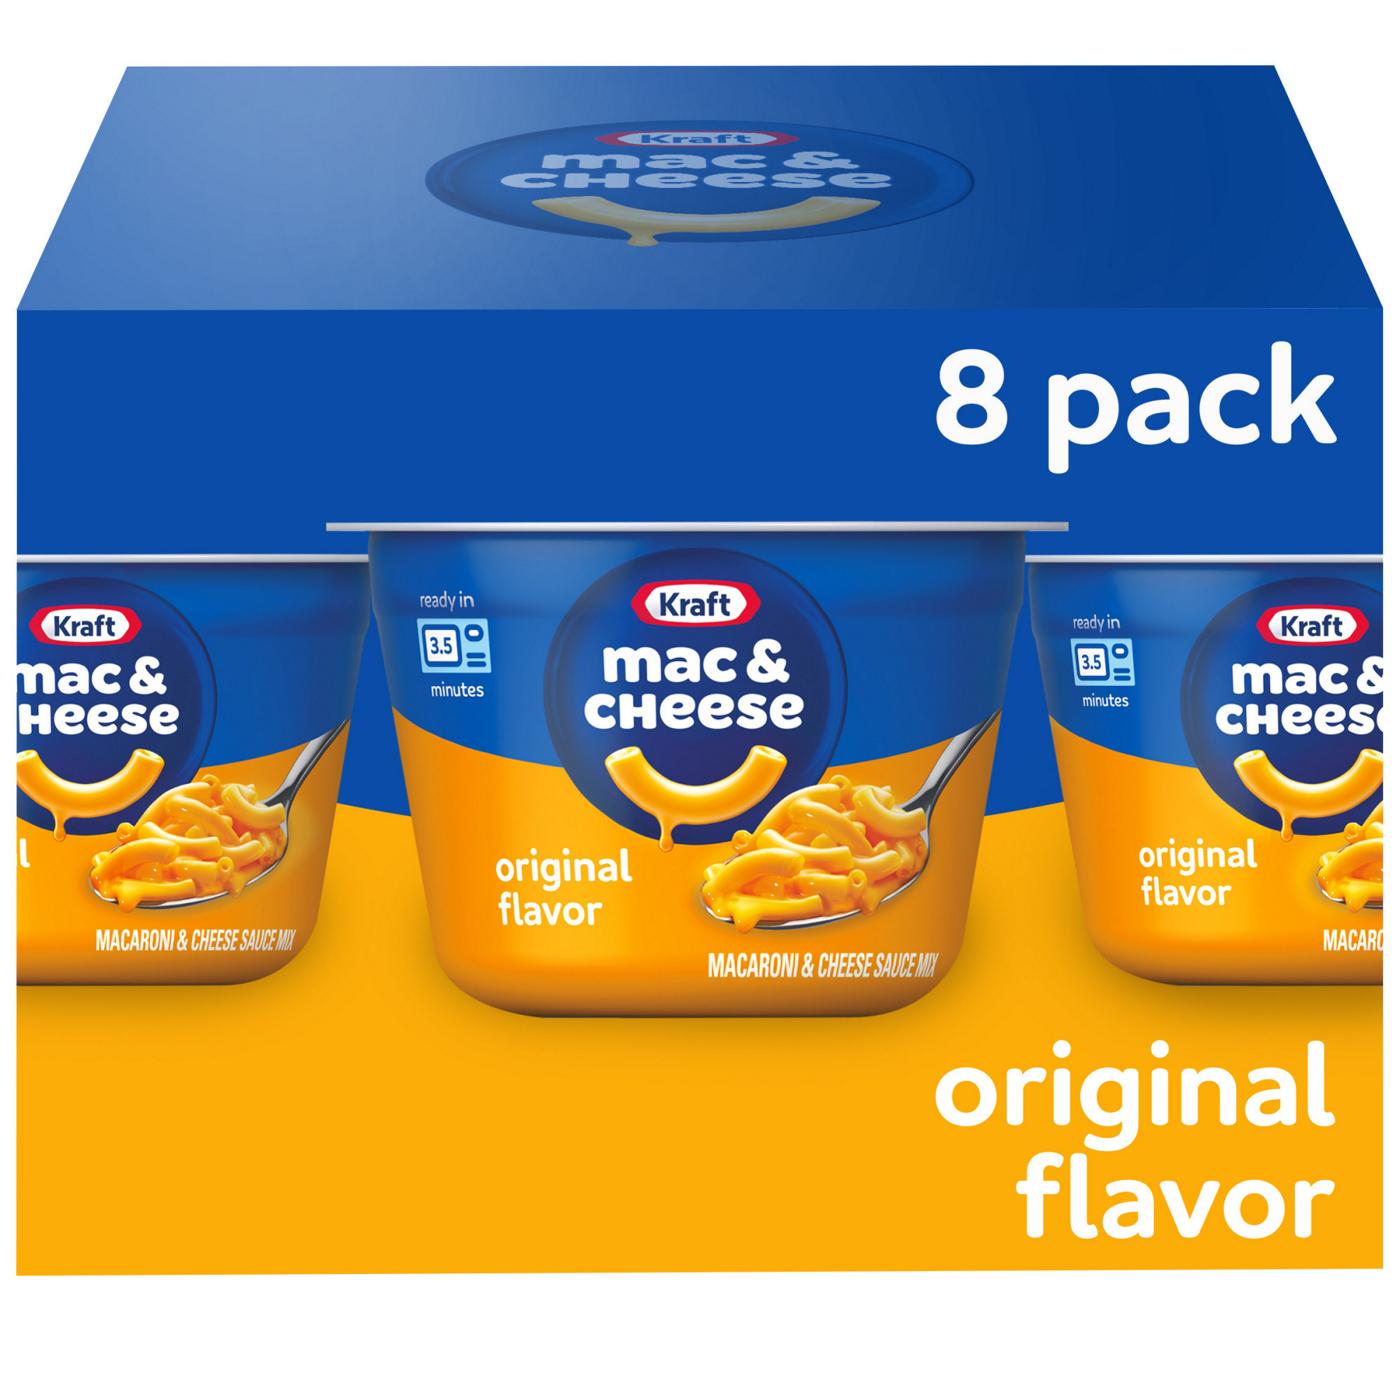 Kraft Original Flavor Macaroni & Cheese Cups - Shop Pantry Meals at H-E-B